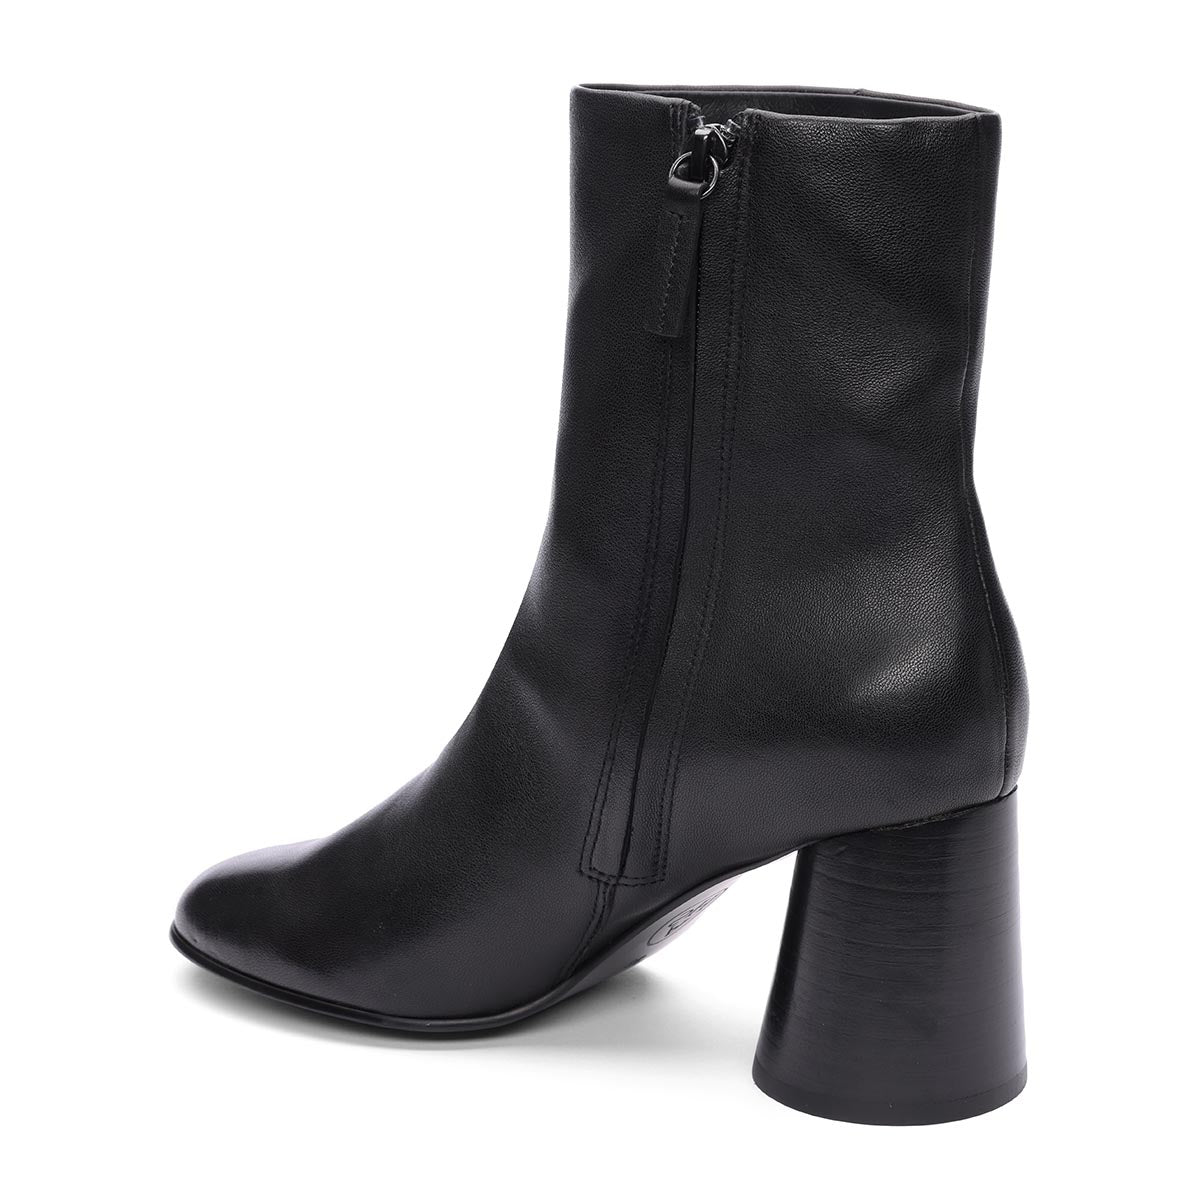 Clone Dress Booties - Black - Dress Ankle Boots - Zipper View - ASH